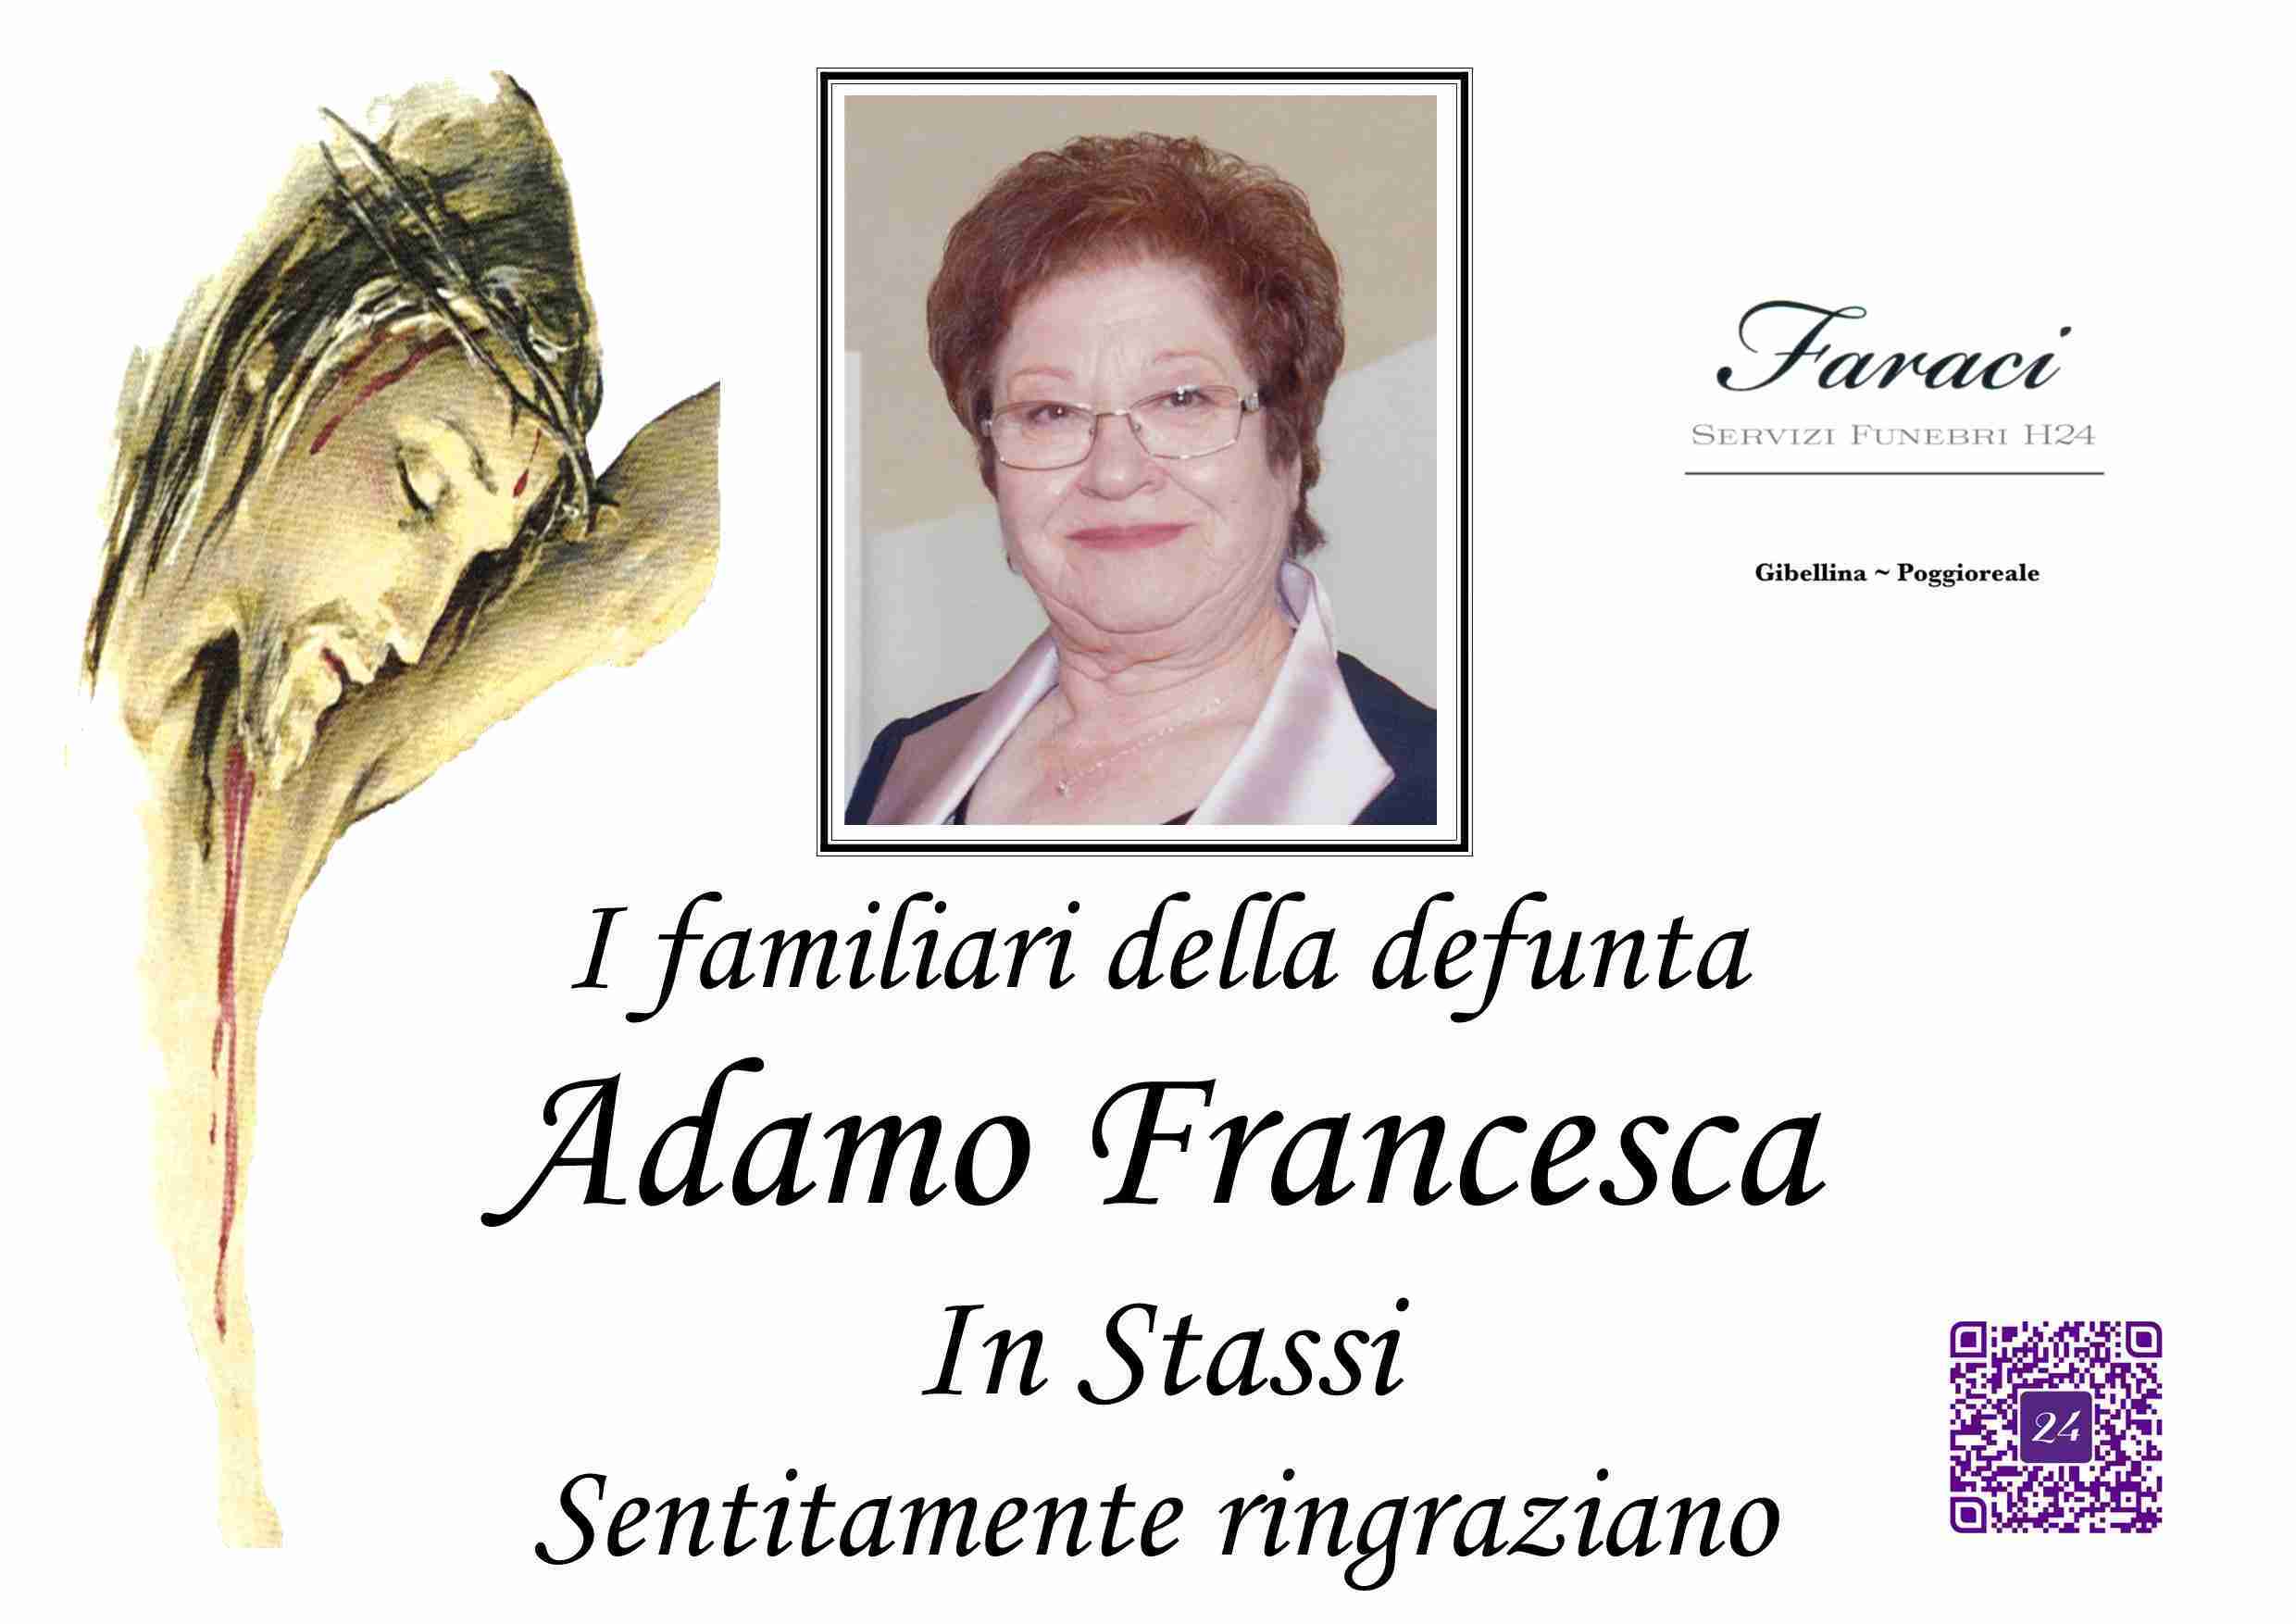 Francesca Adamo